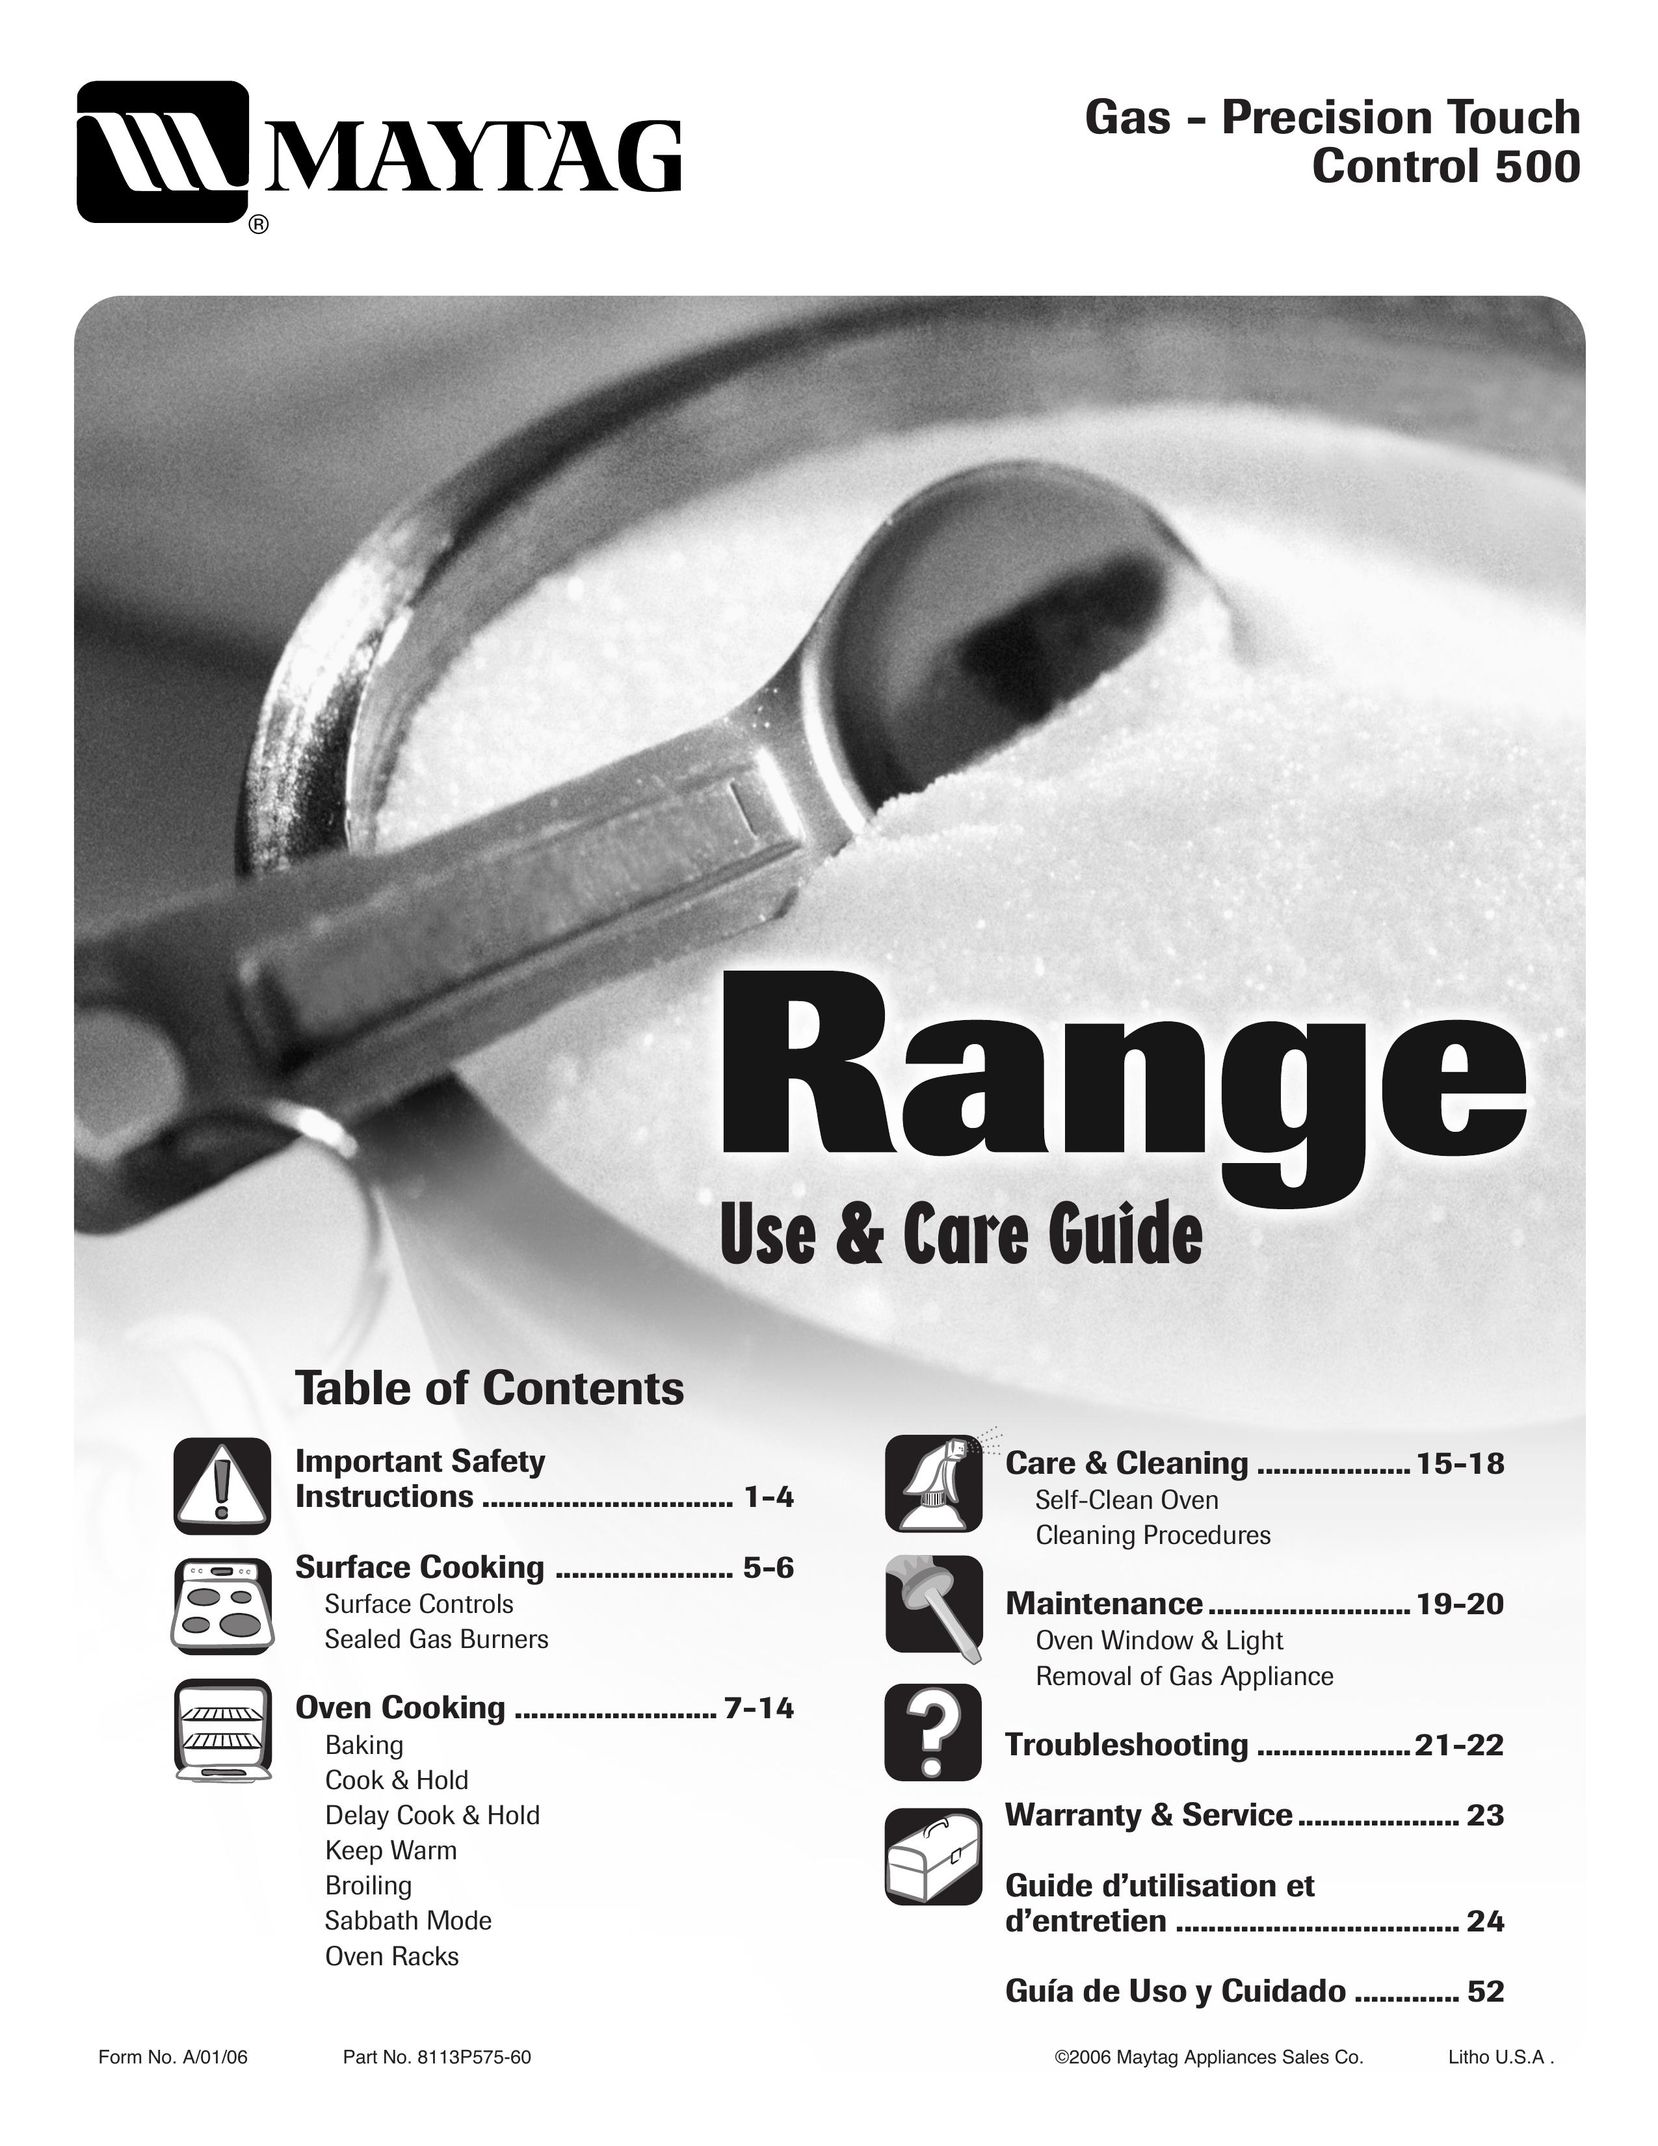 Maytag Gas - Precision Touch Control 500 Range Range User Manual